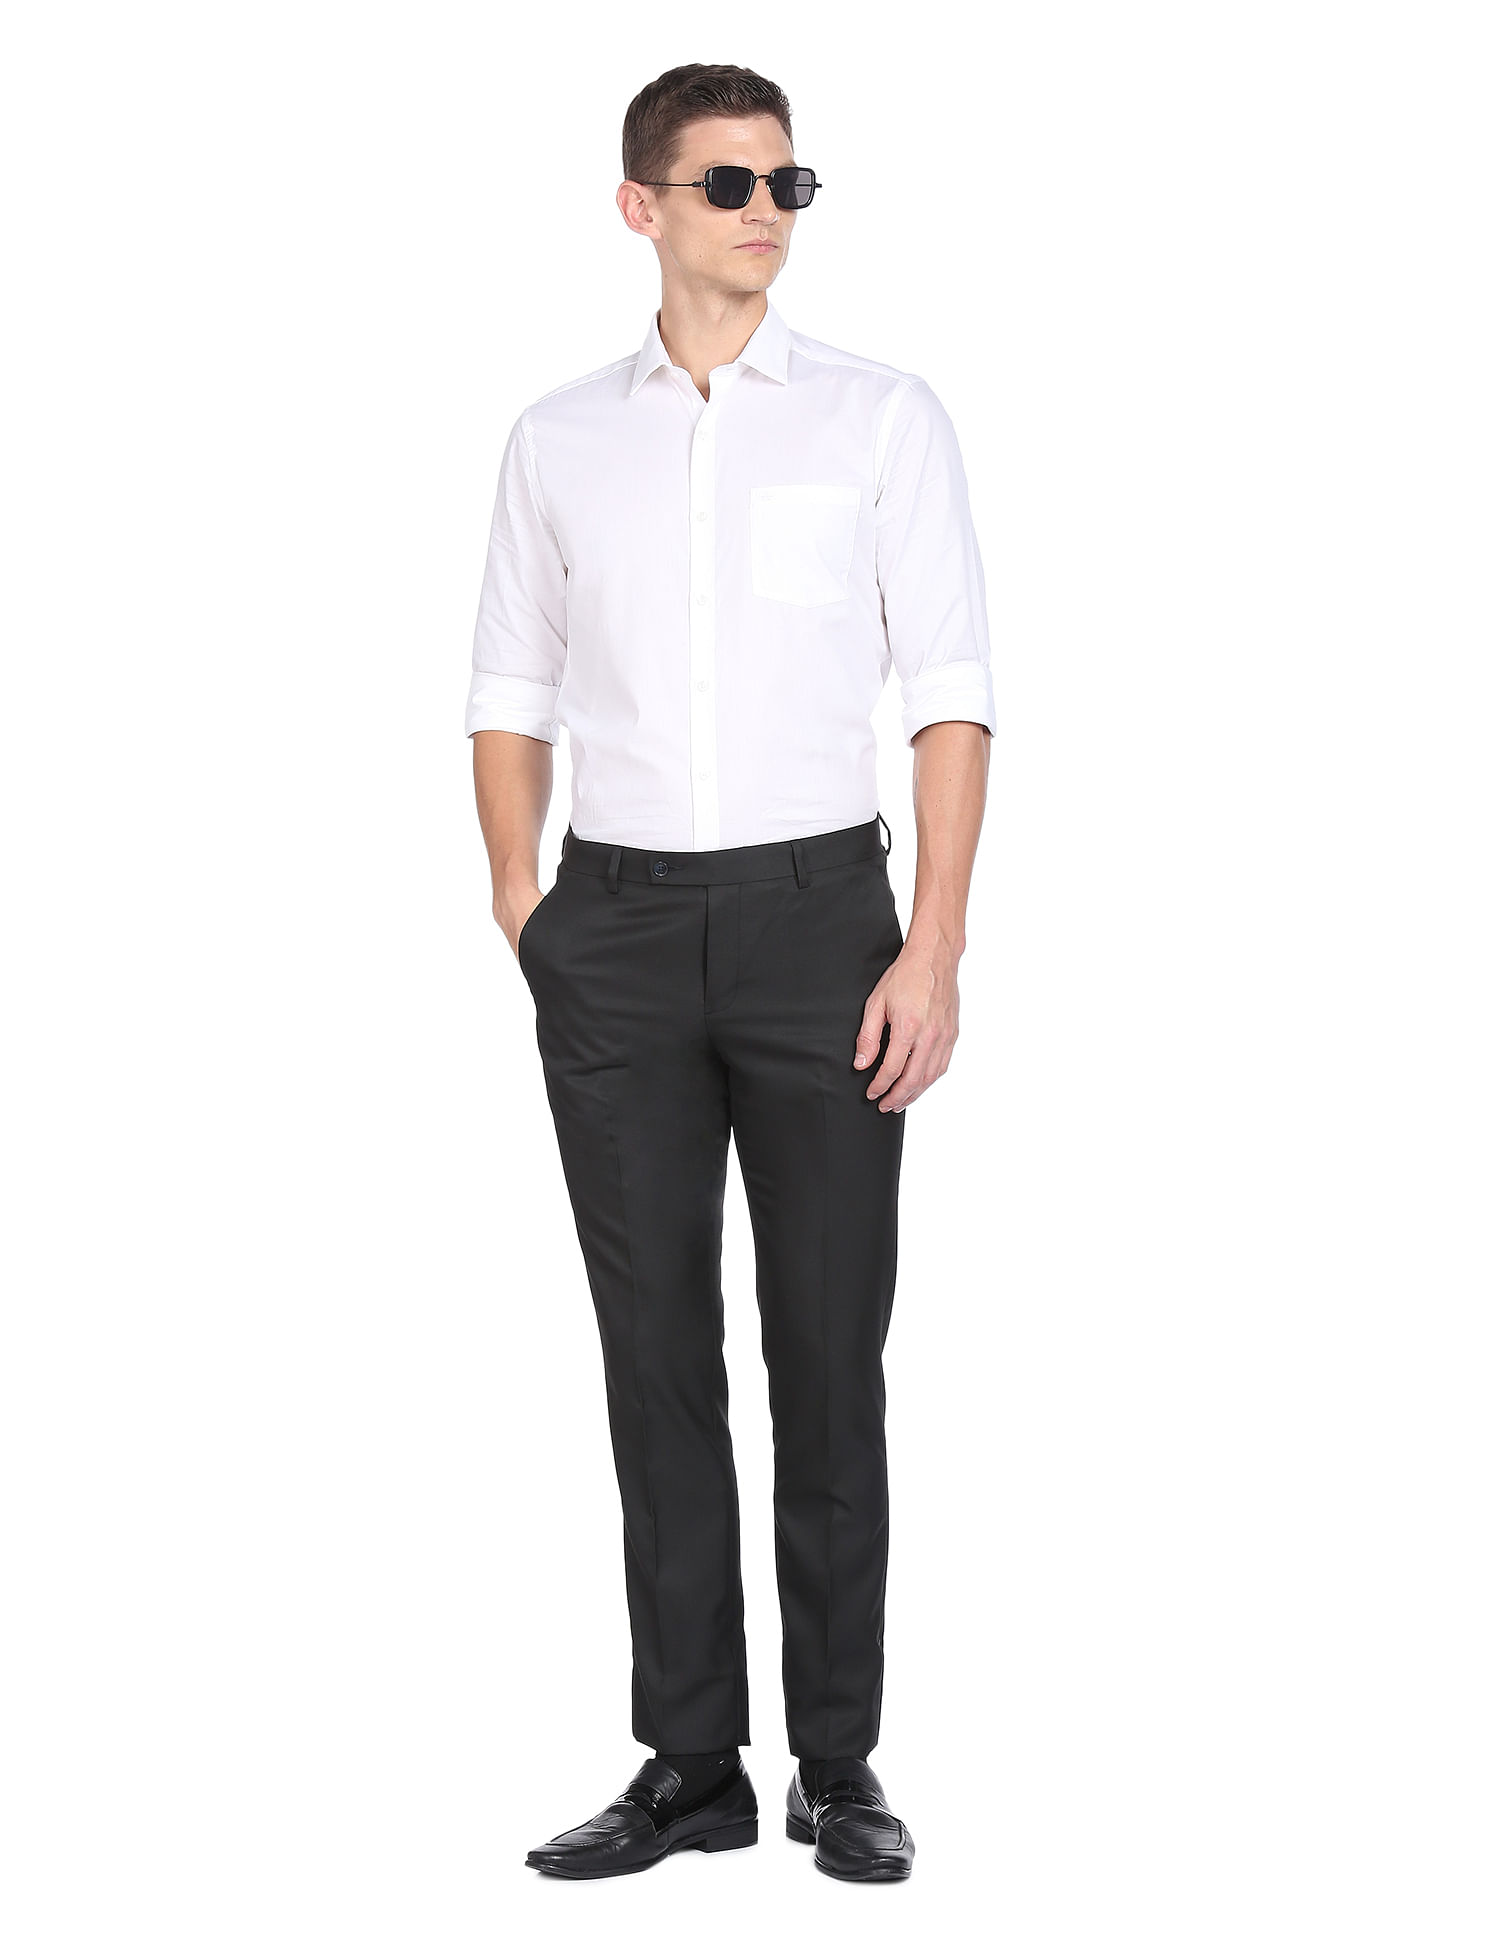 Buy AWAACS Men's Regular Fit Trousers (13718_3, Black, 34) at Amazon.in